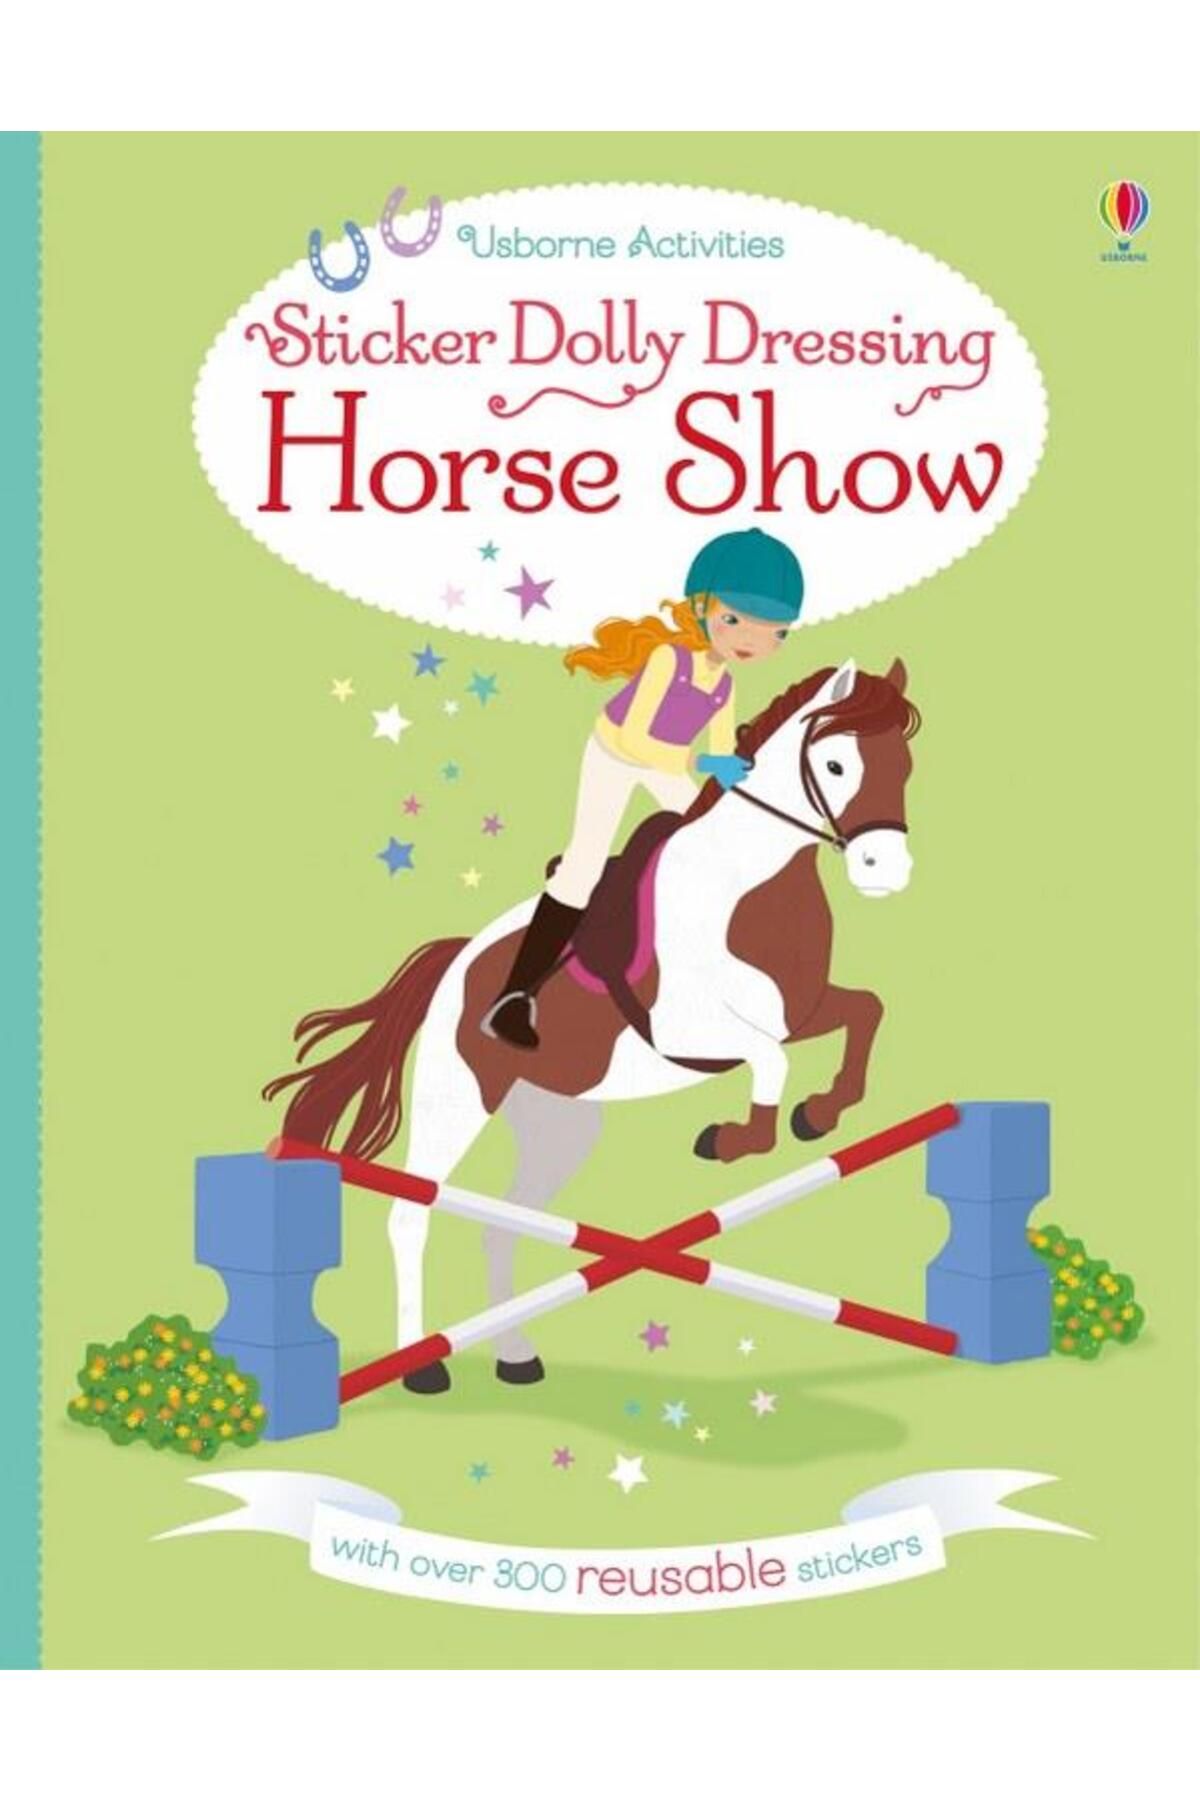 Usborne Sticker Dolly Dressing Horse Show